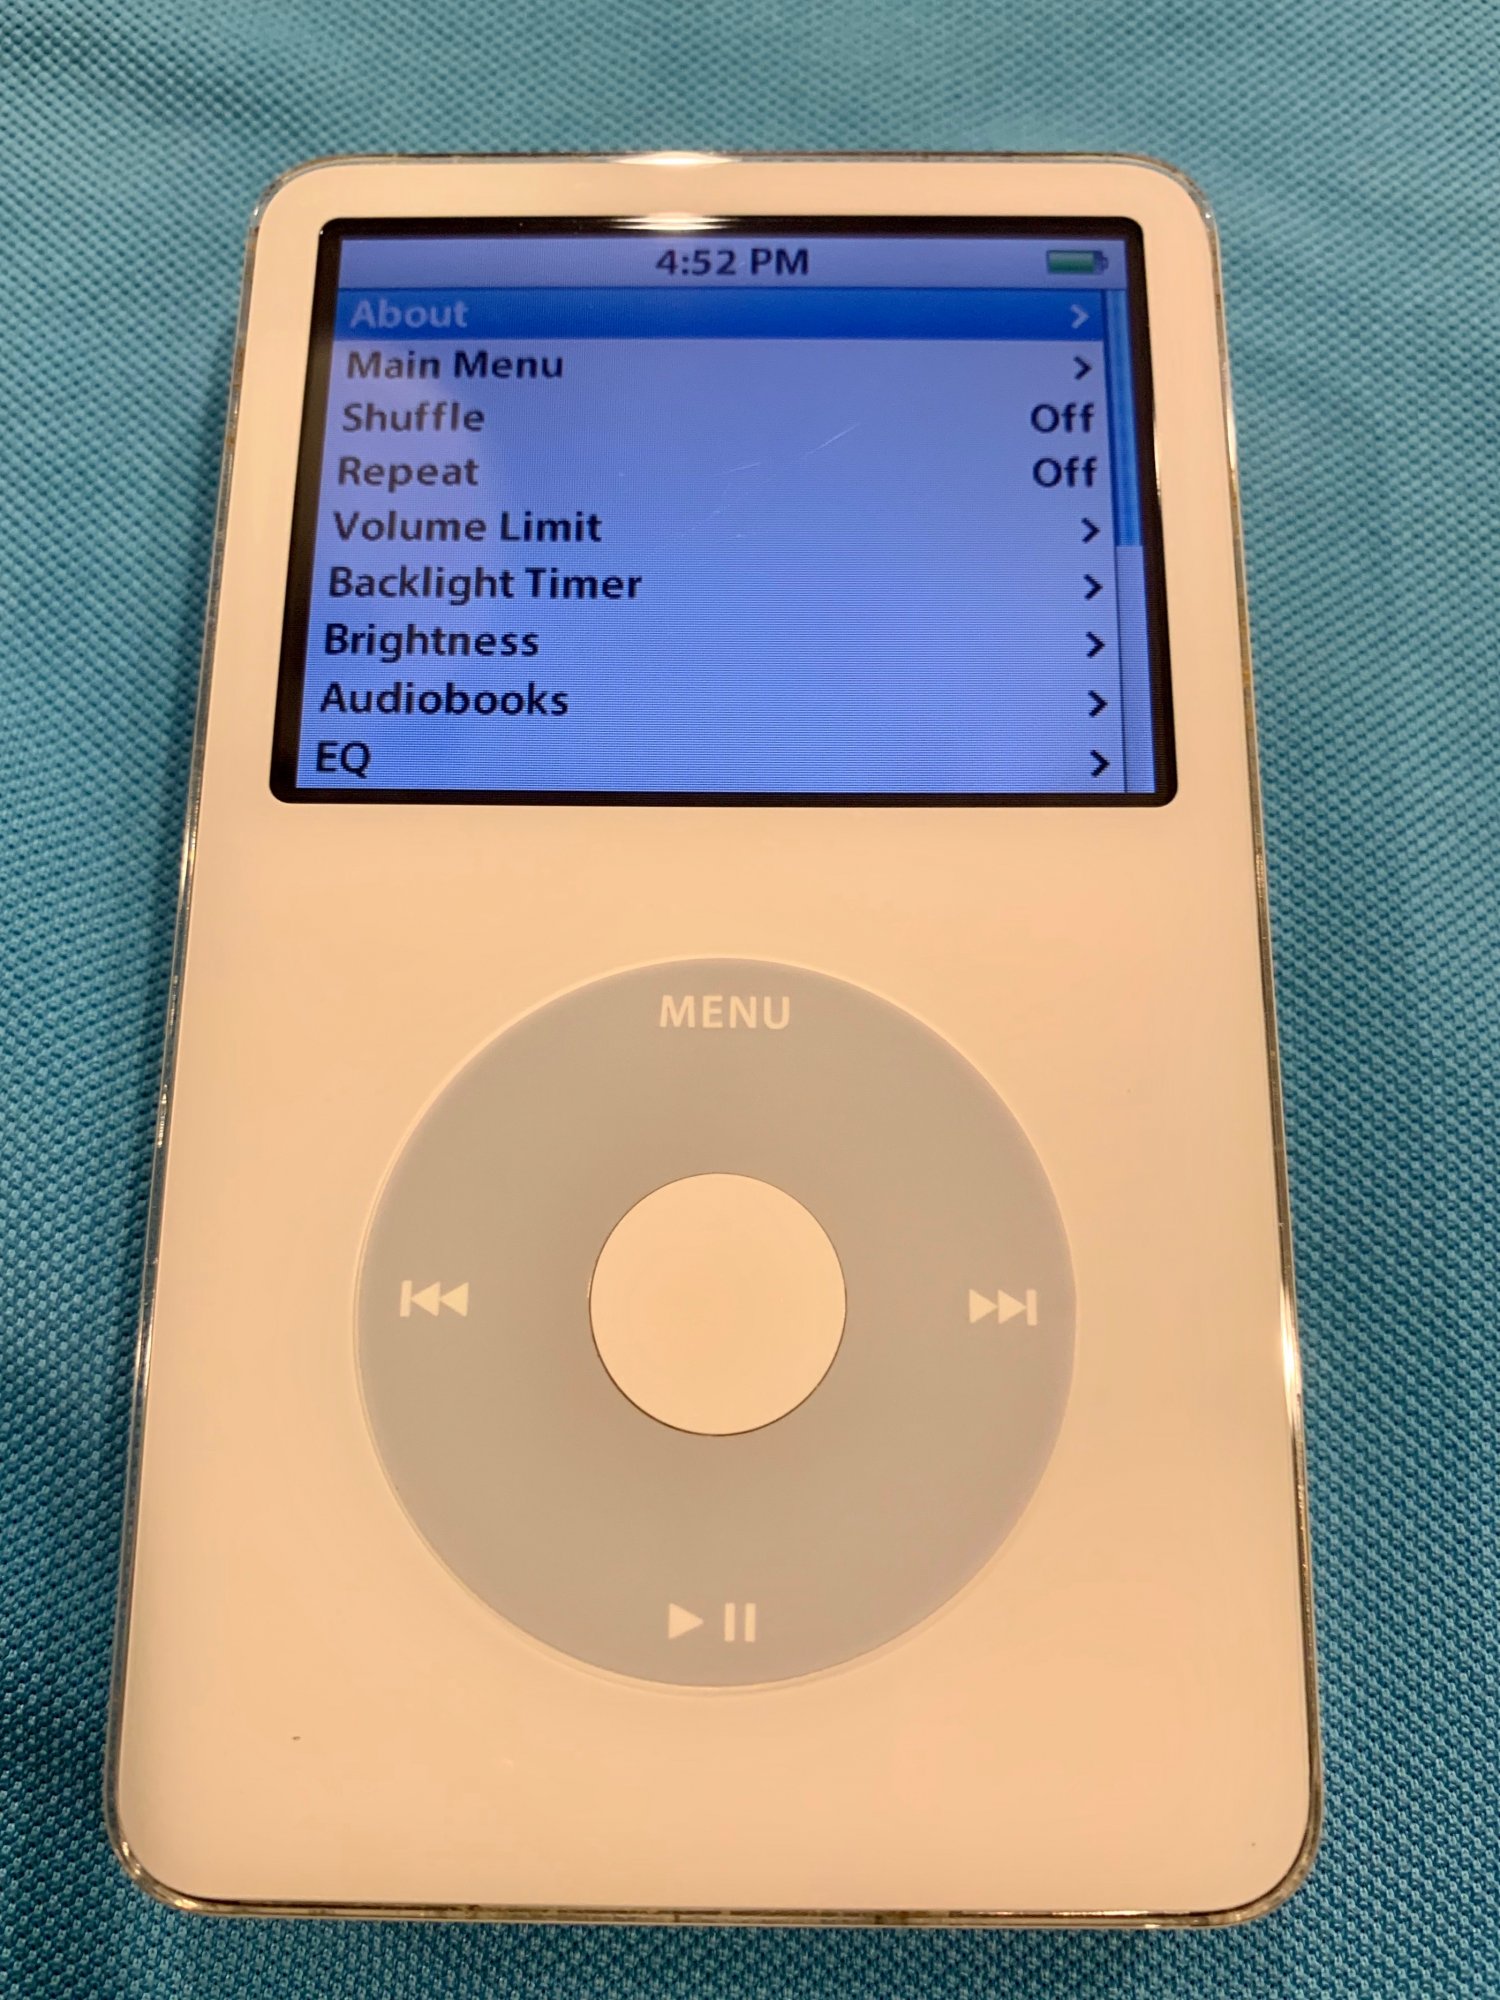 eventyr Jeg spiser morgenmad Prestigefyldte 80 gb iPod (5th generation Late 2006) | MacRumors Forums